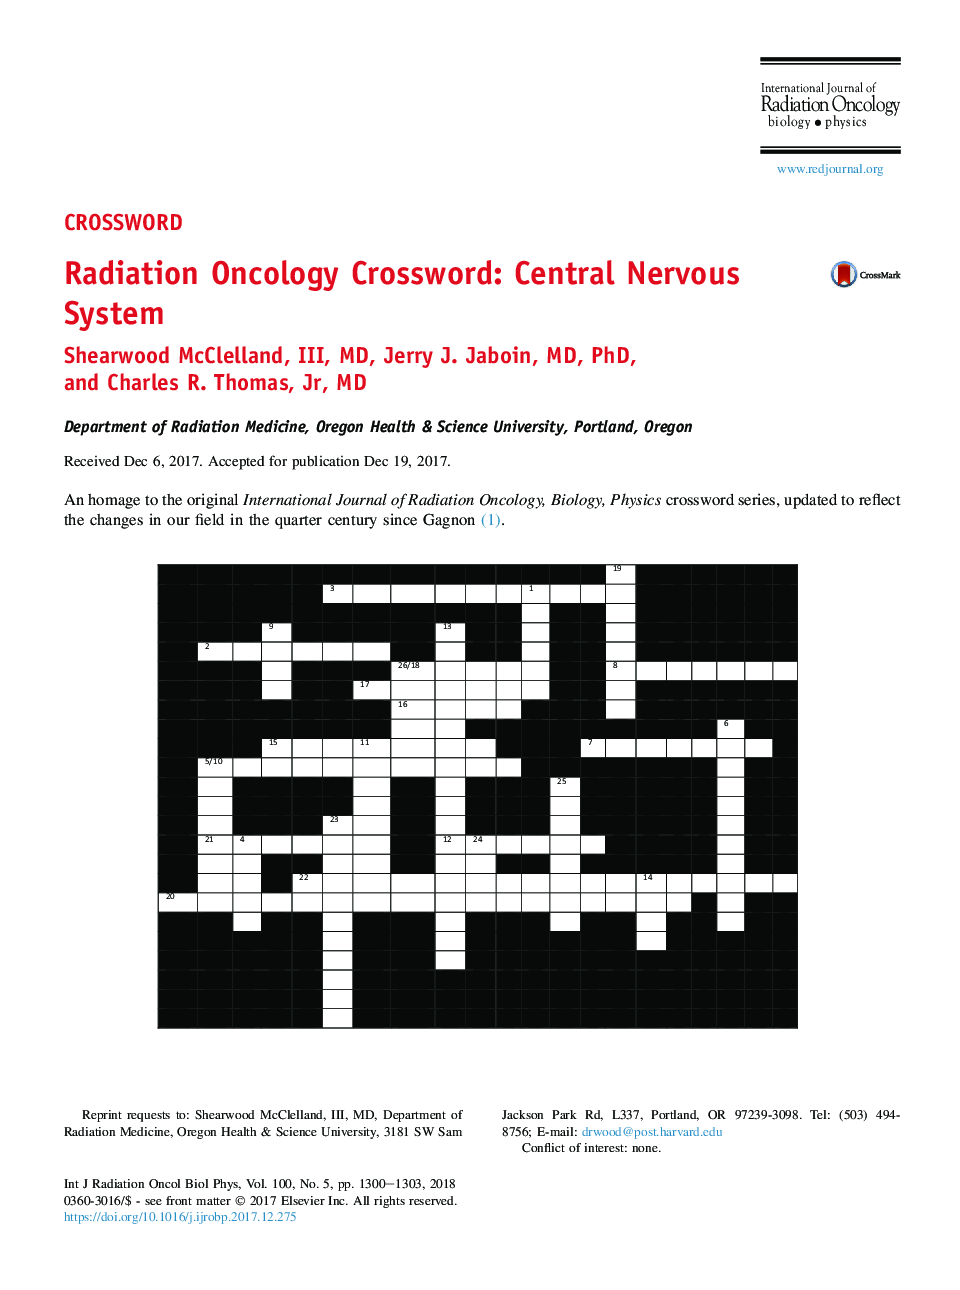 Radiation Oncology Crossword: Central Nervous System